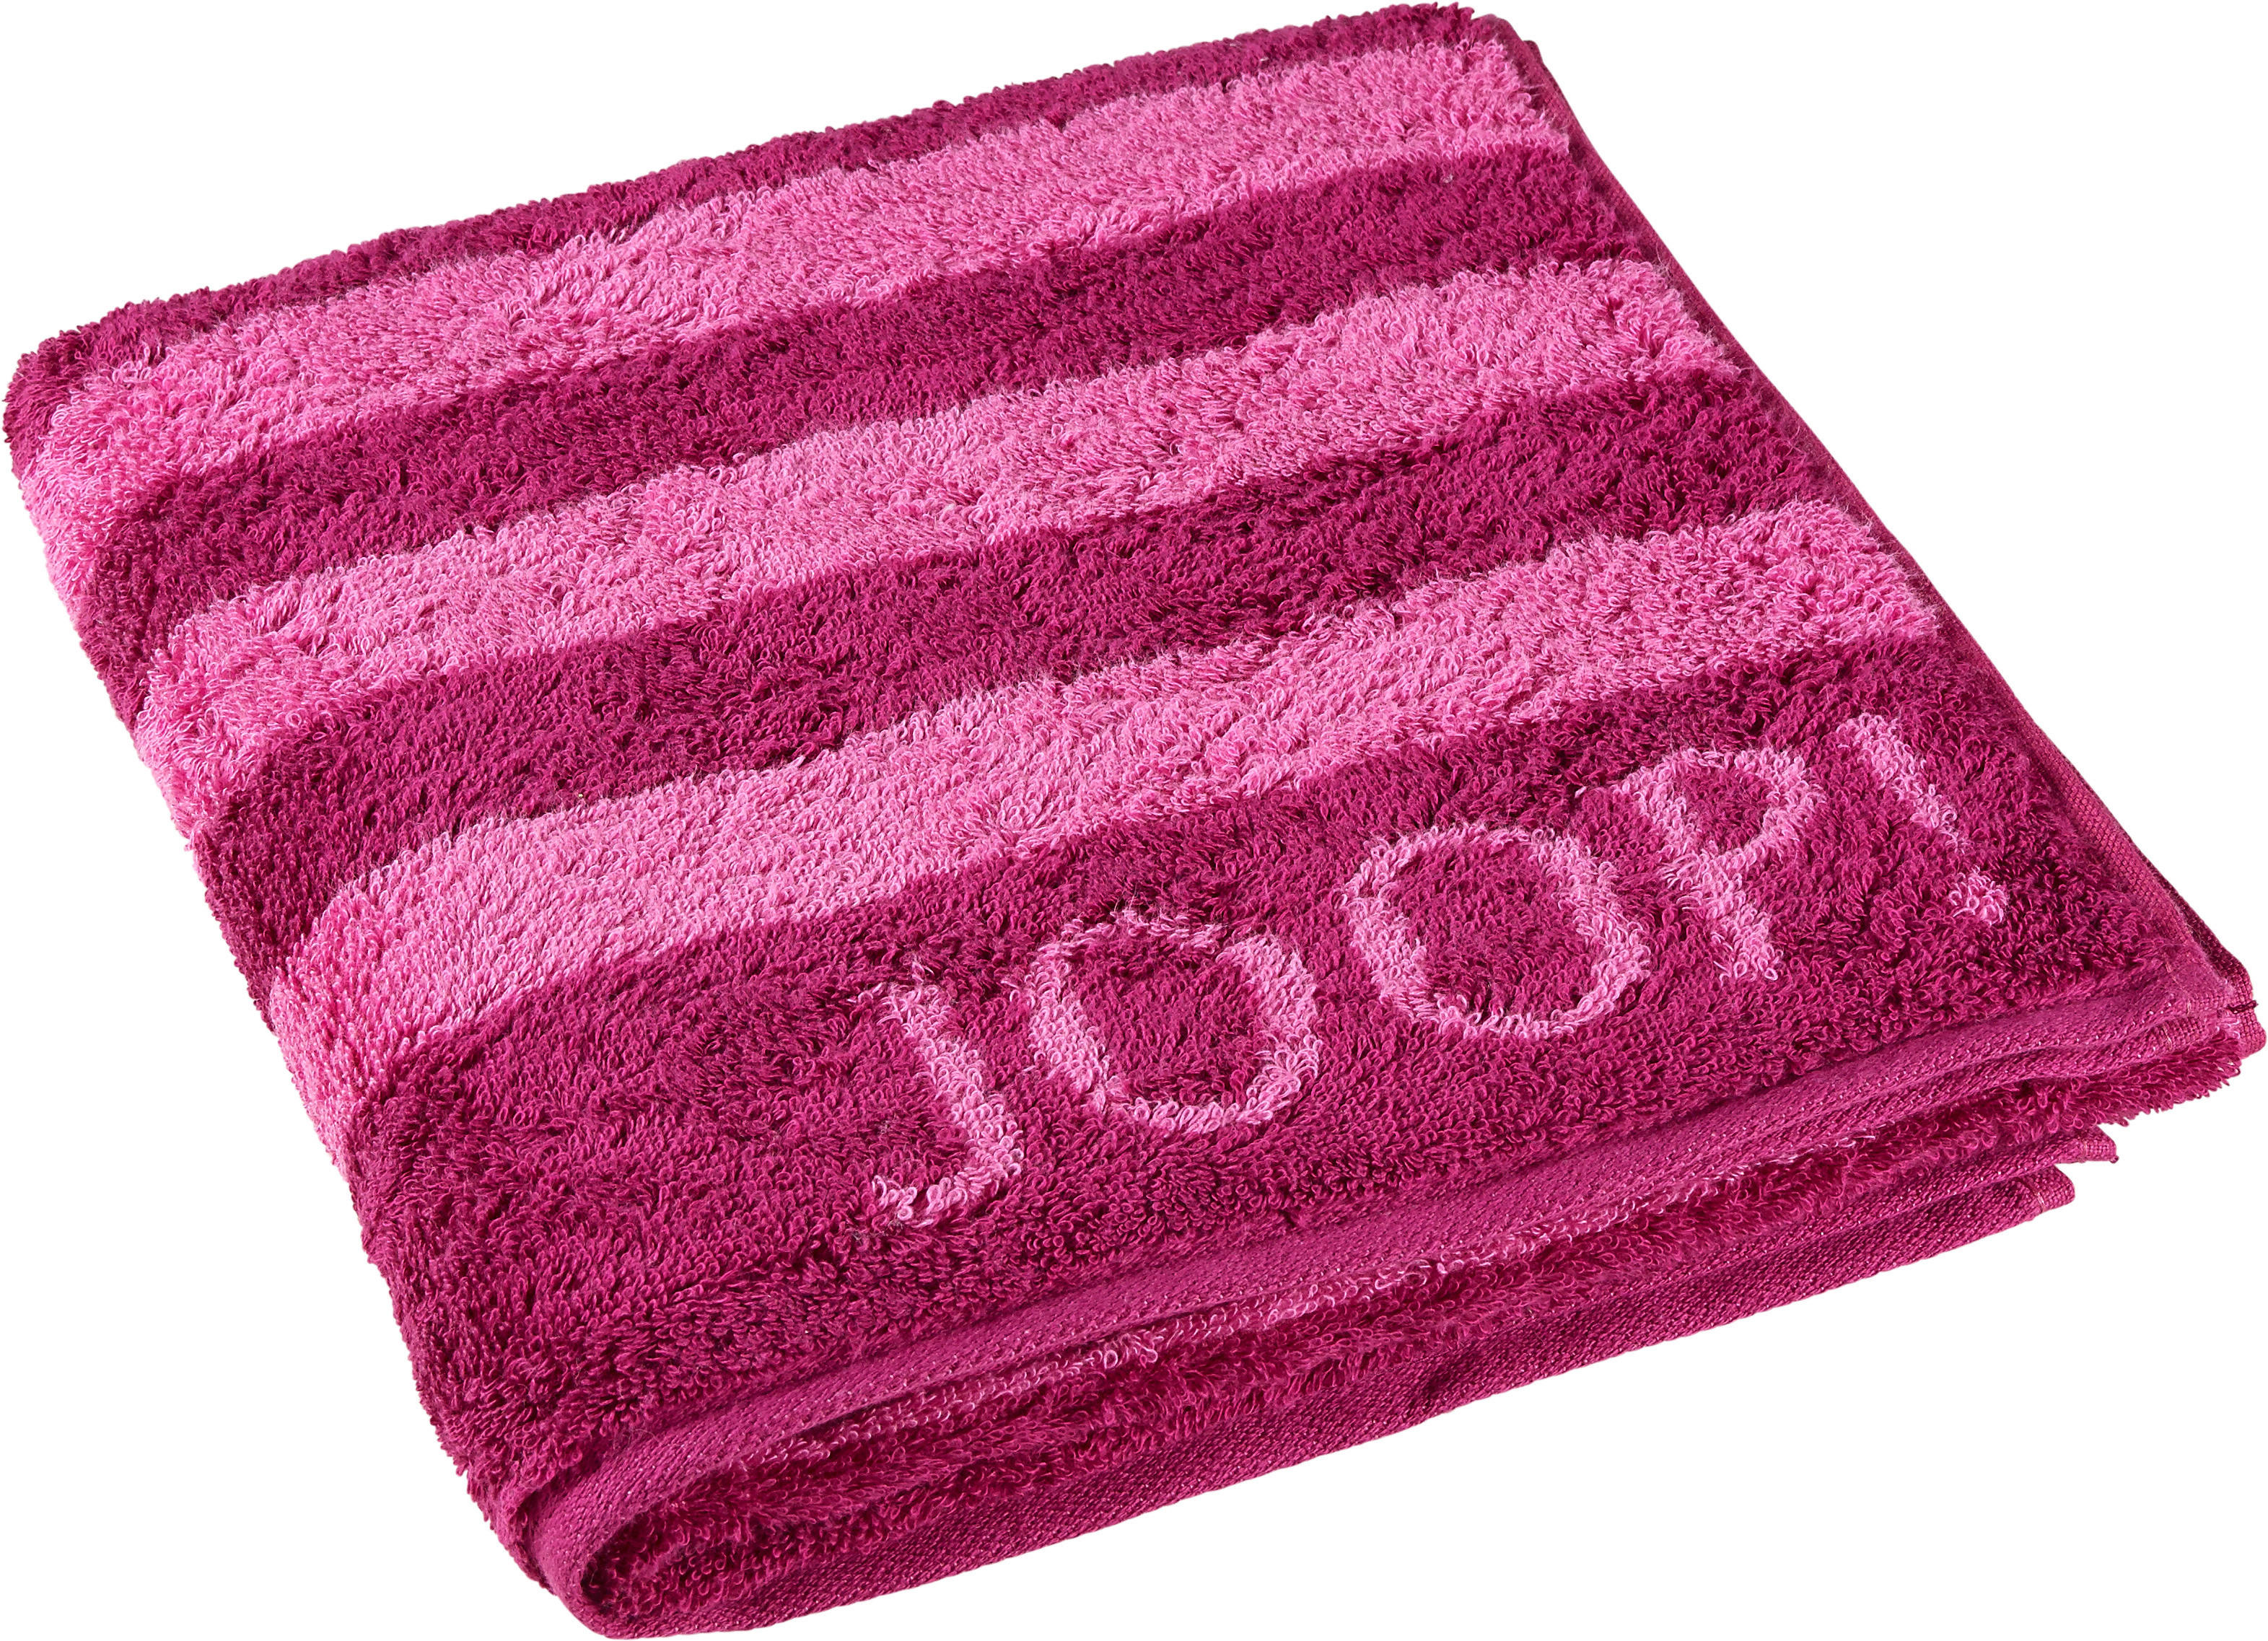 HANDTUCH Classic Stripes  - Pink/Beere, Basics, Textil (50/100cm) - Joop!